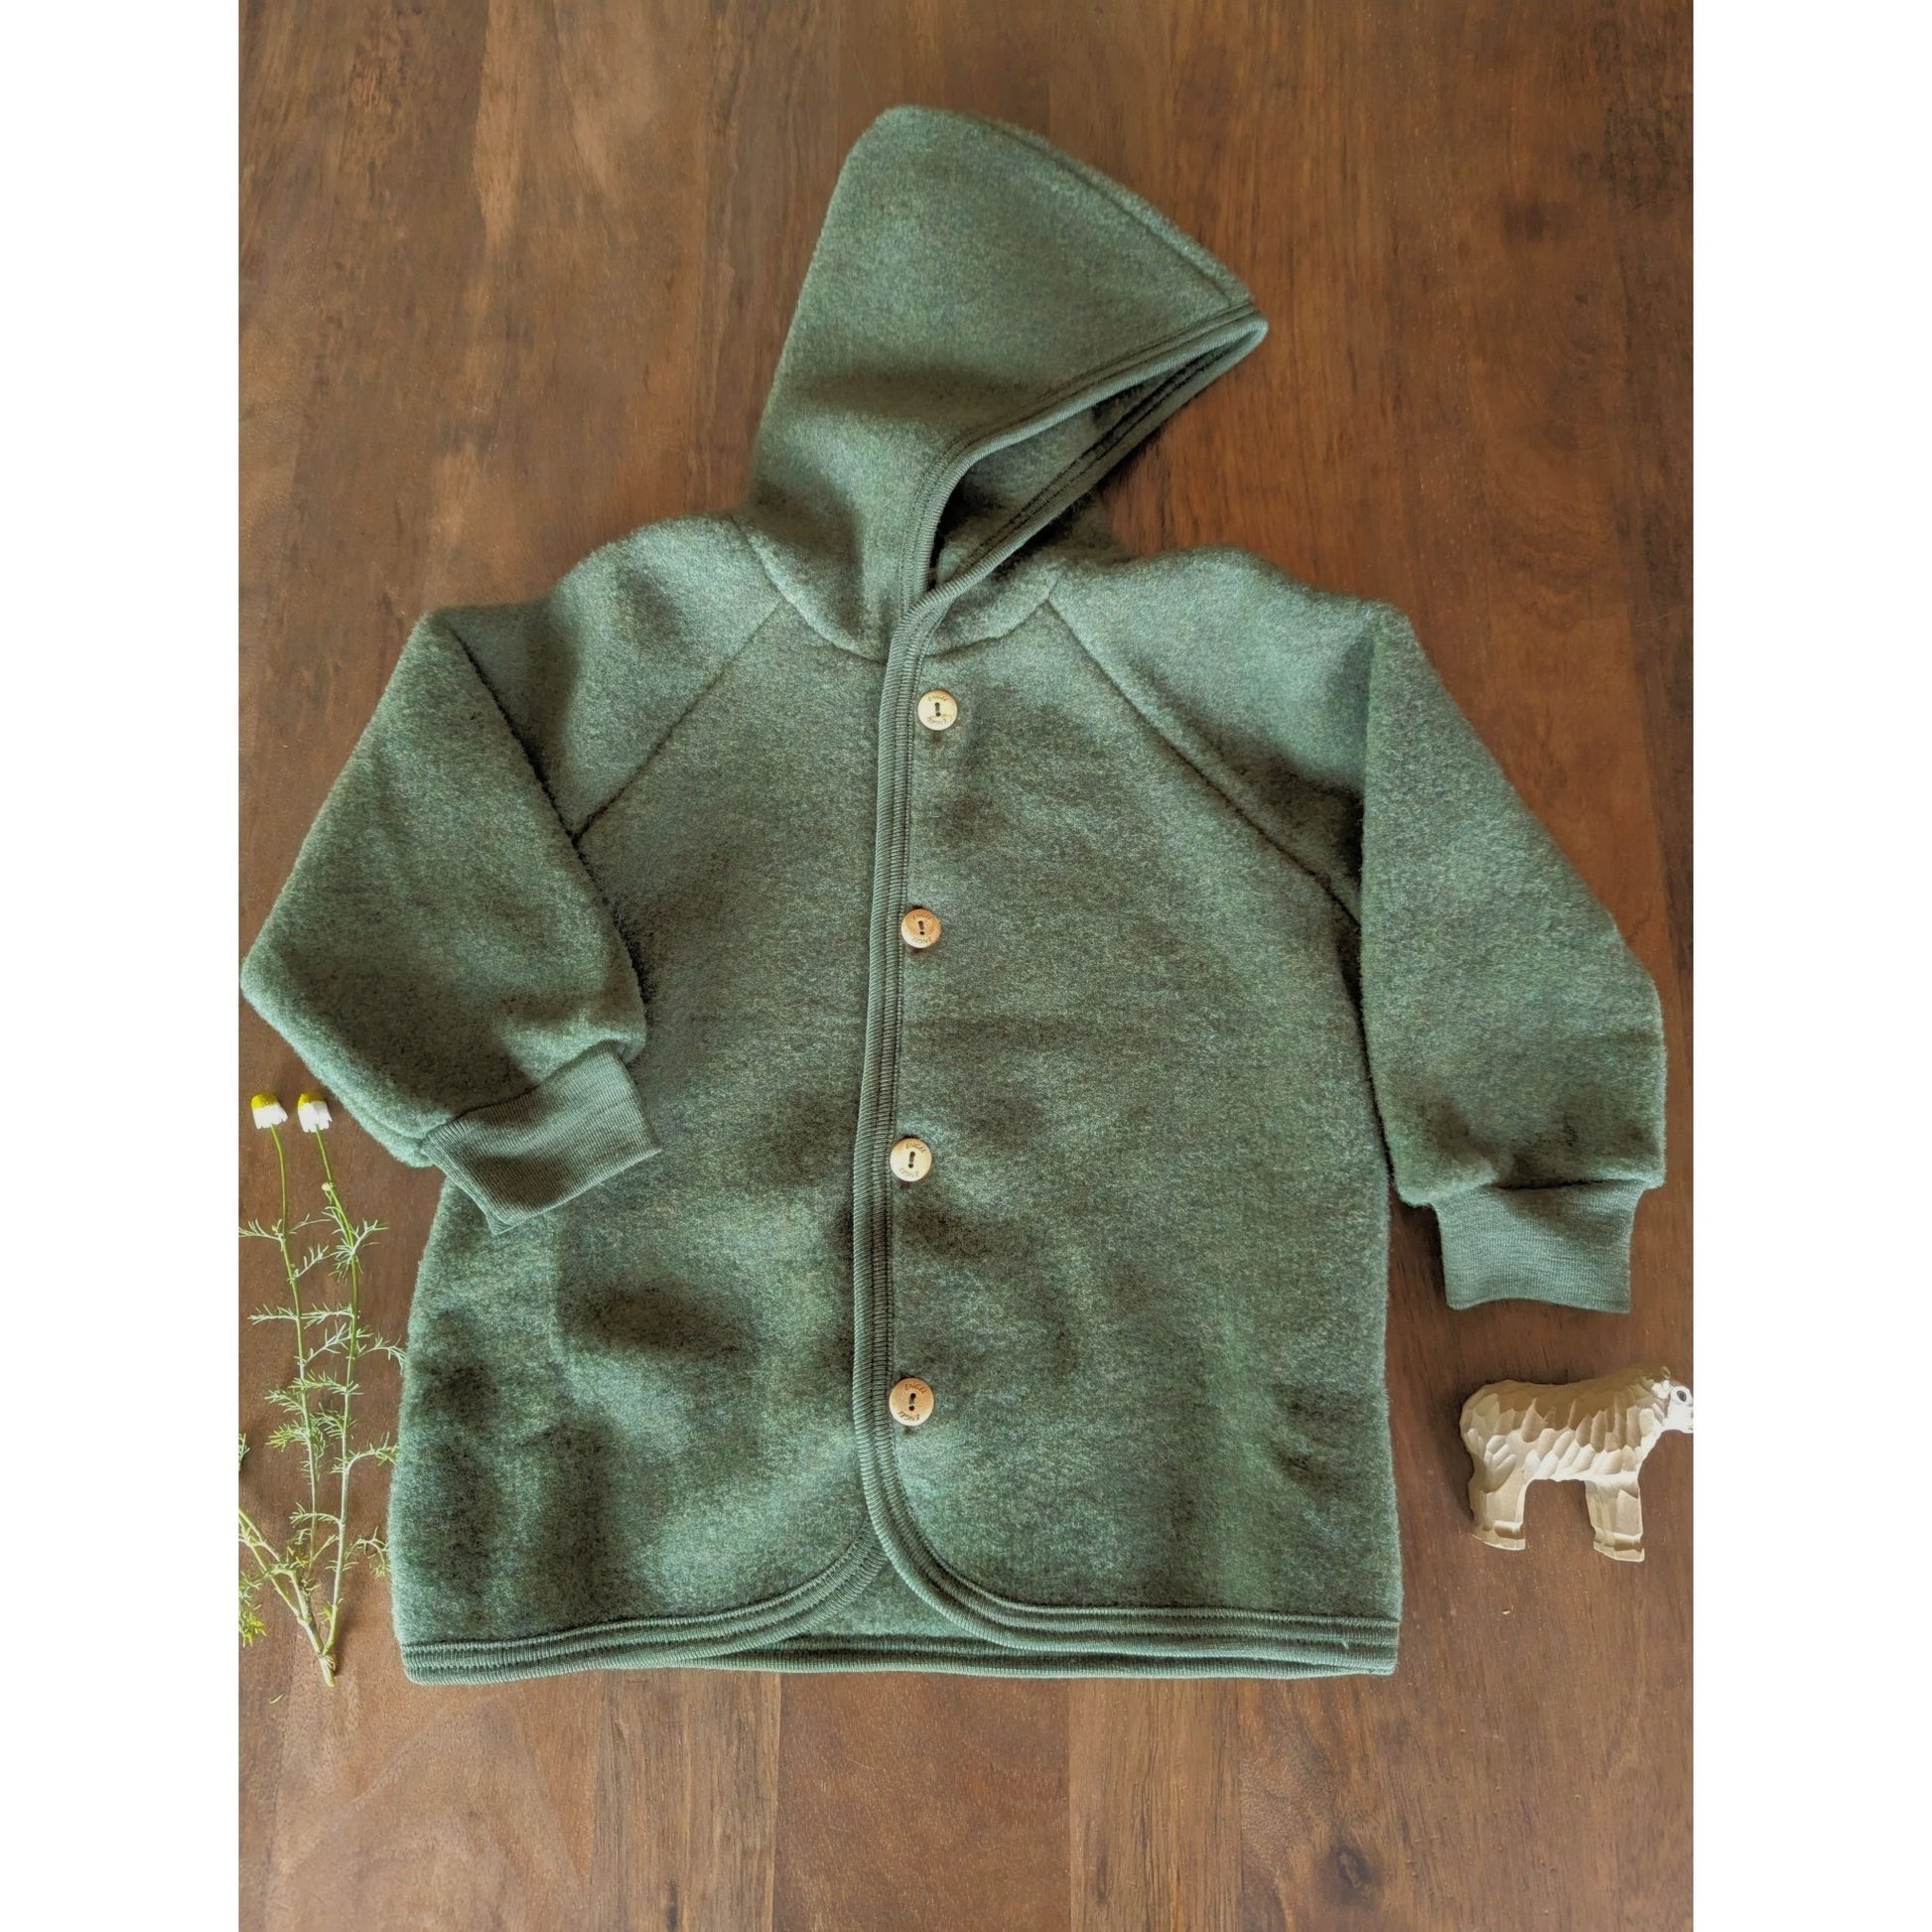 Engel - Organic Wool Fleece Jacket for Babies and Kids - Nature's Wild Child